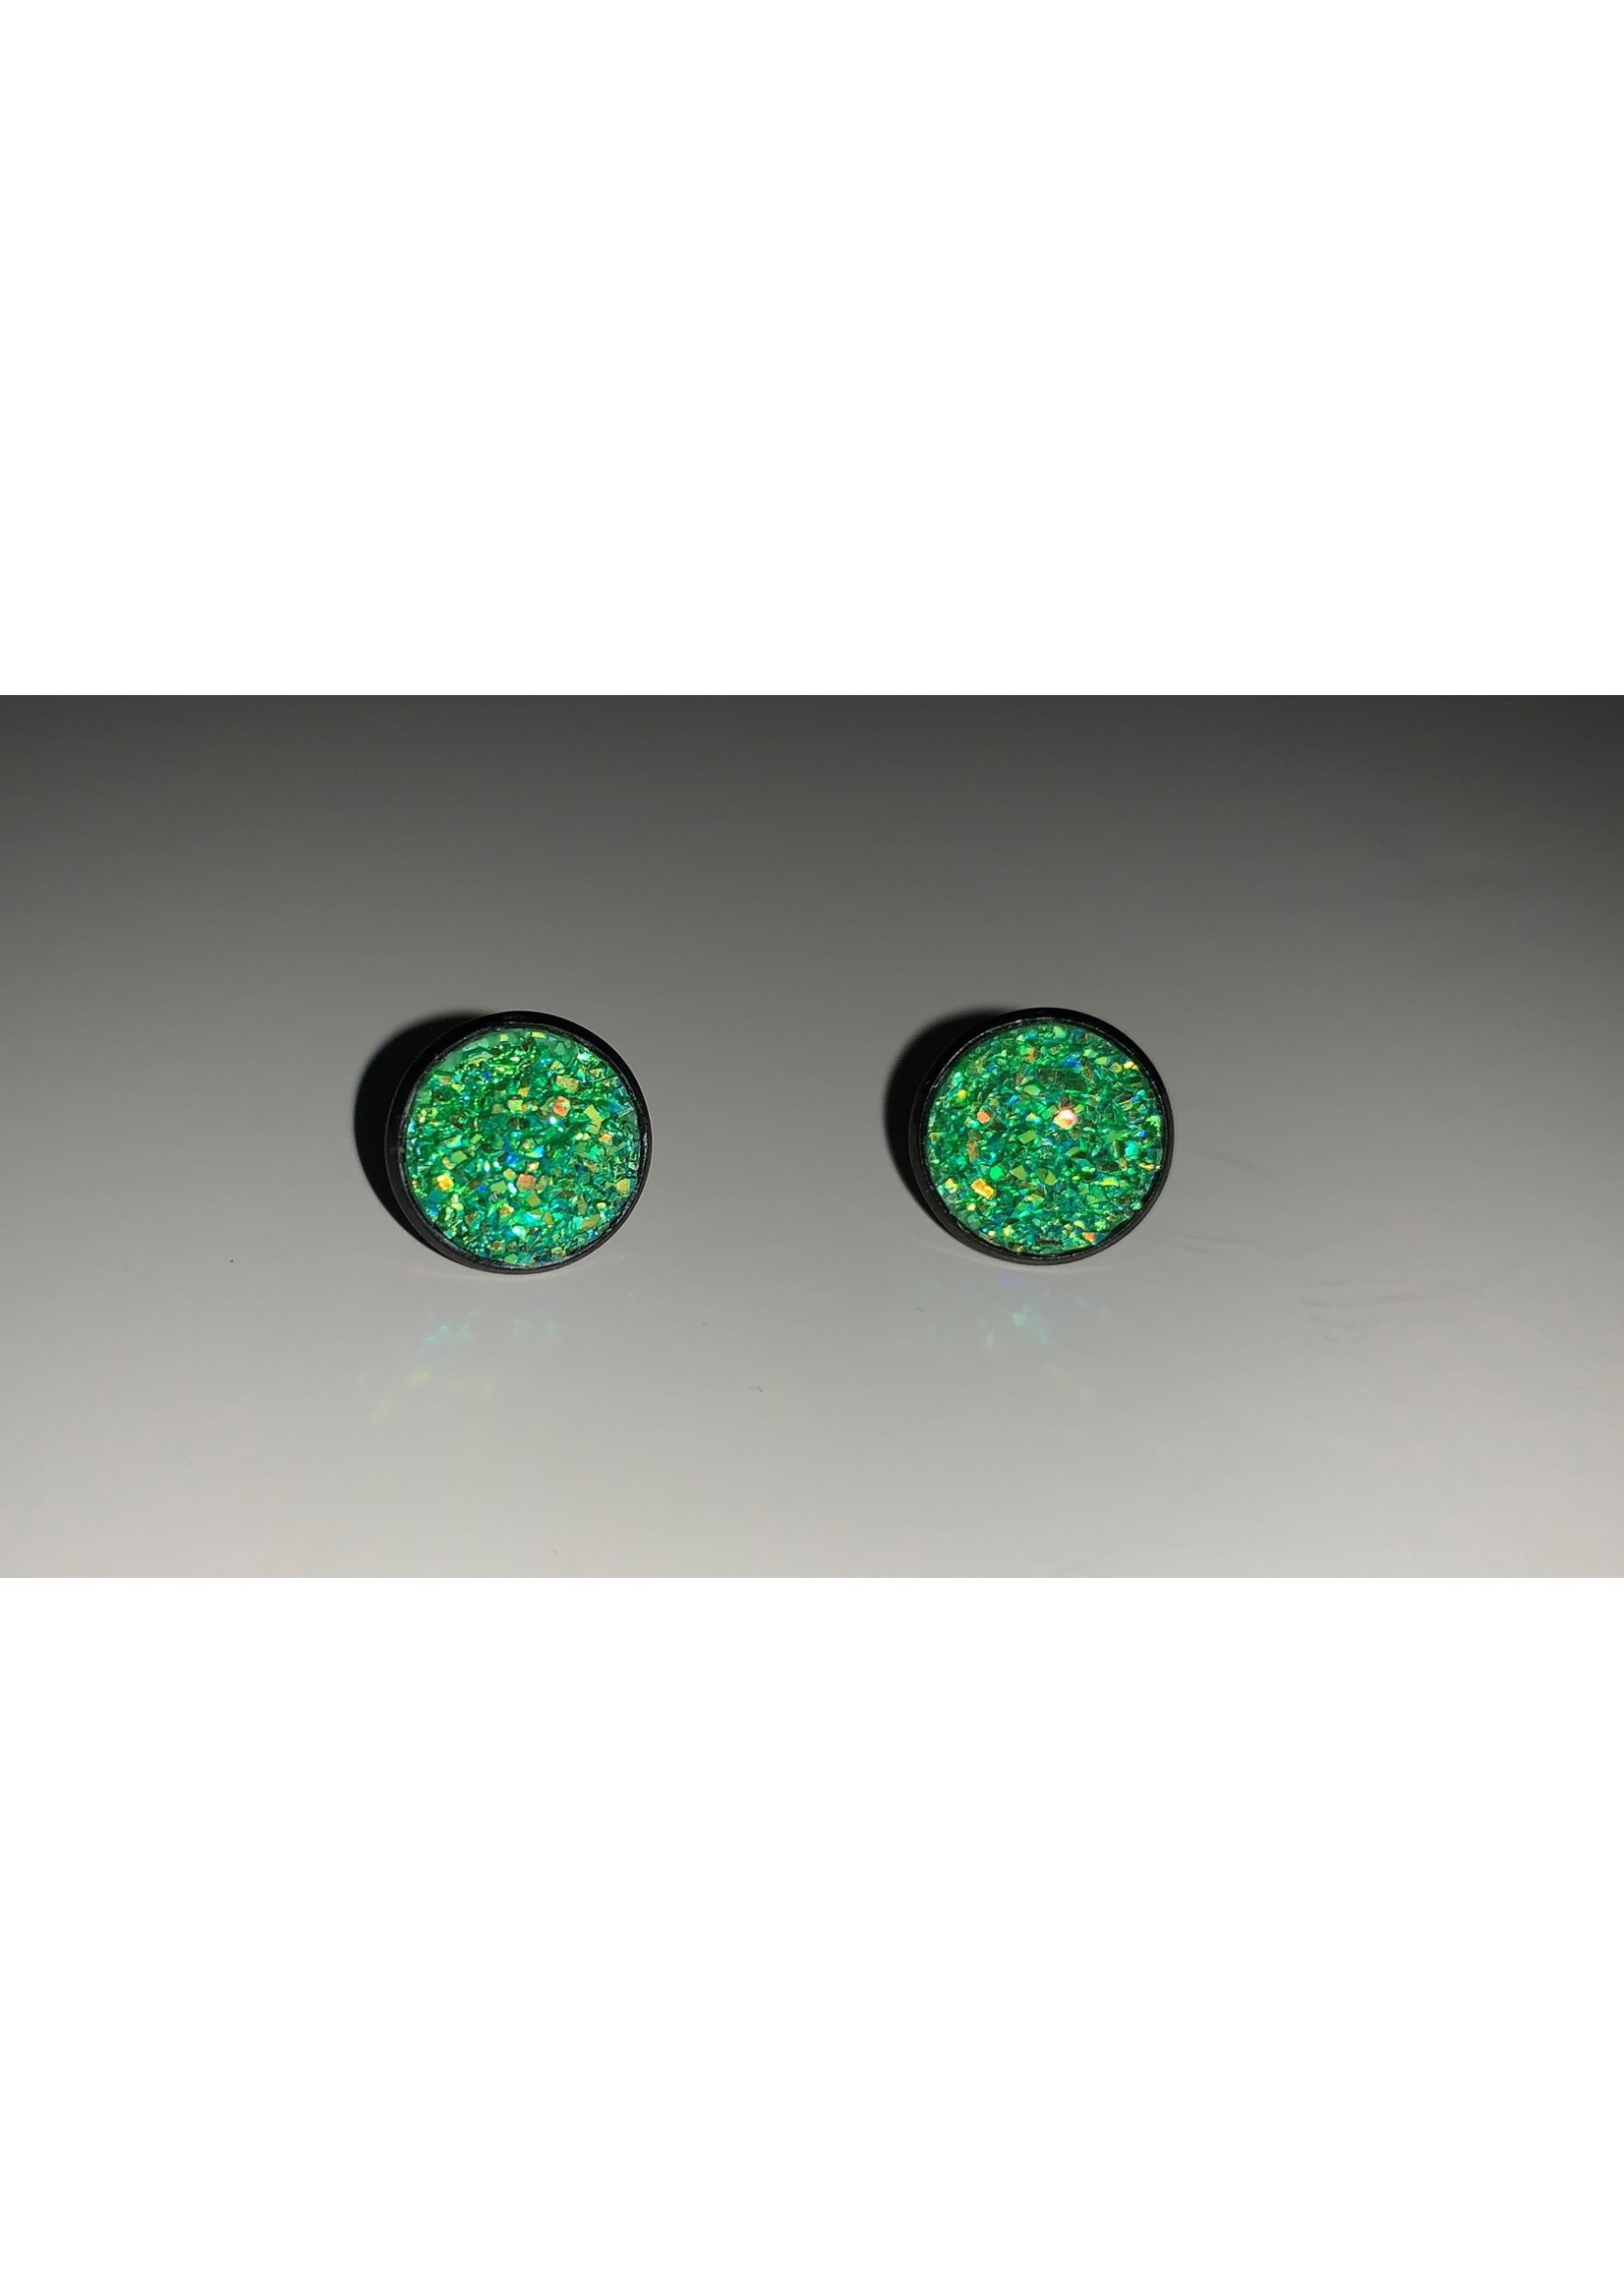 Earrings Small Cabochon Aqua Green Sparkle